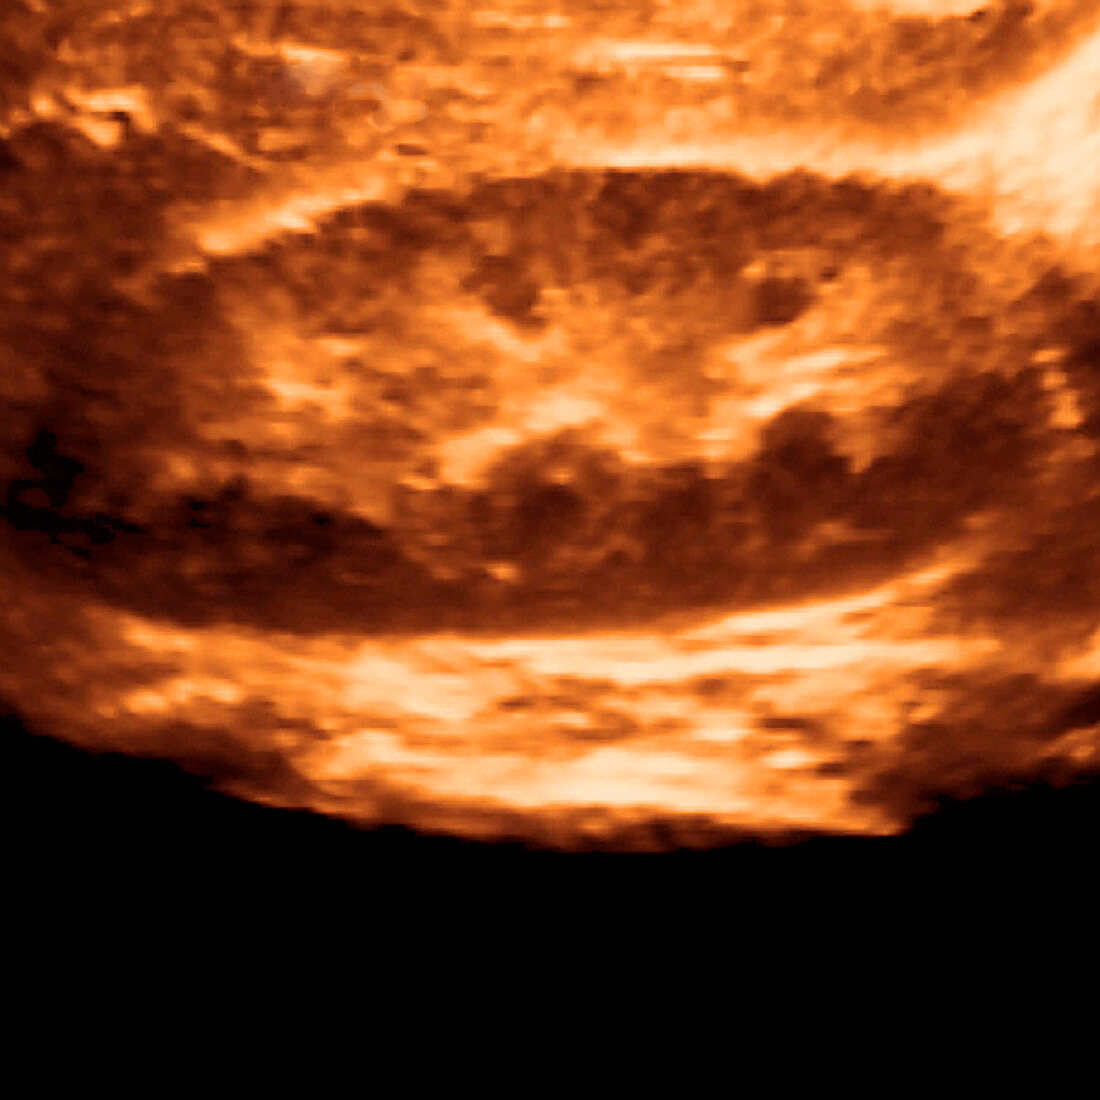 Kidney,ultrasound scan